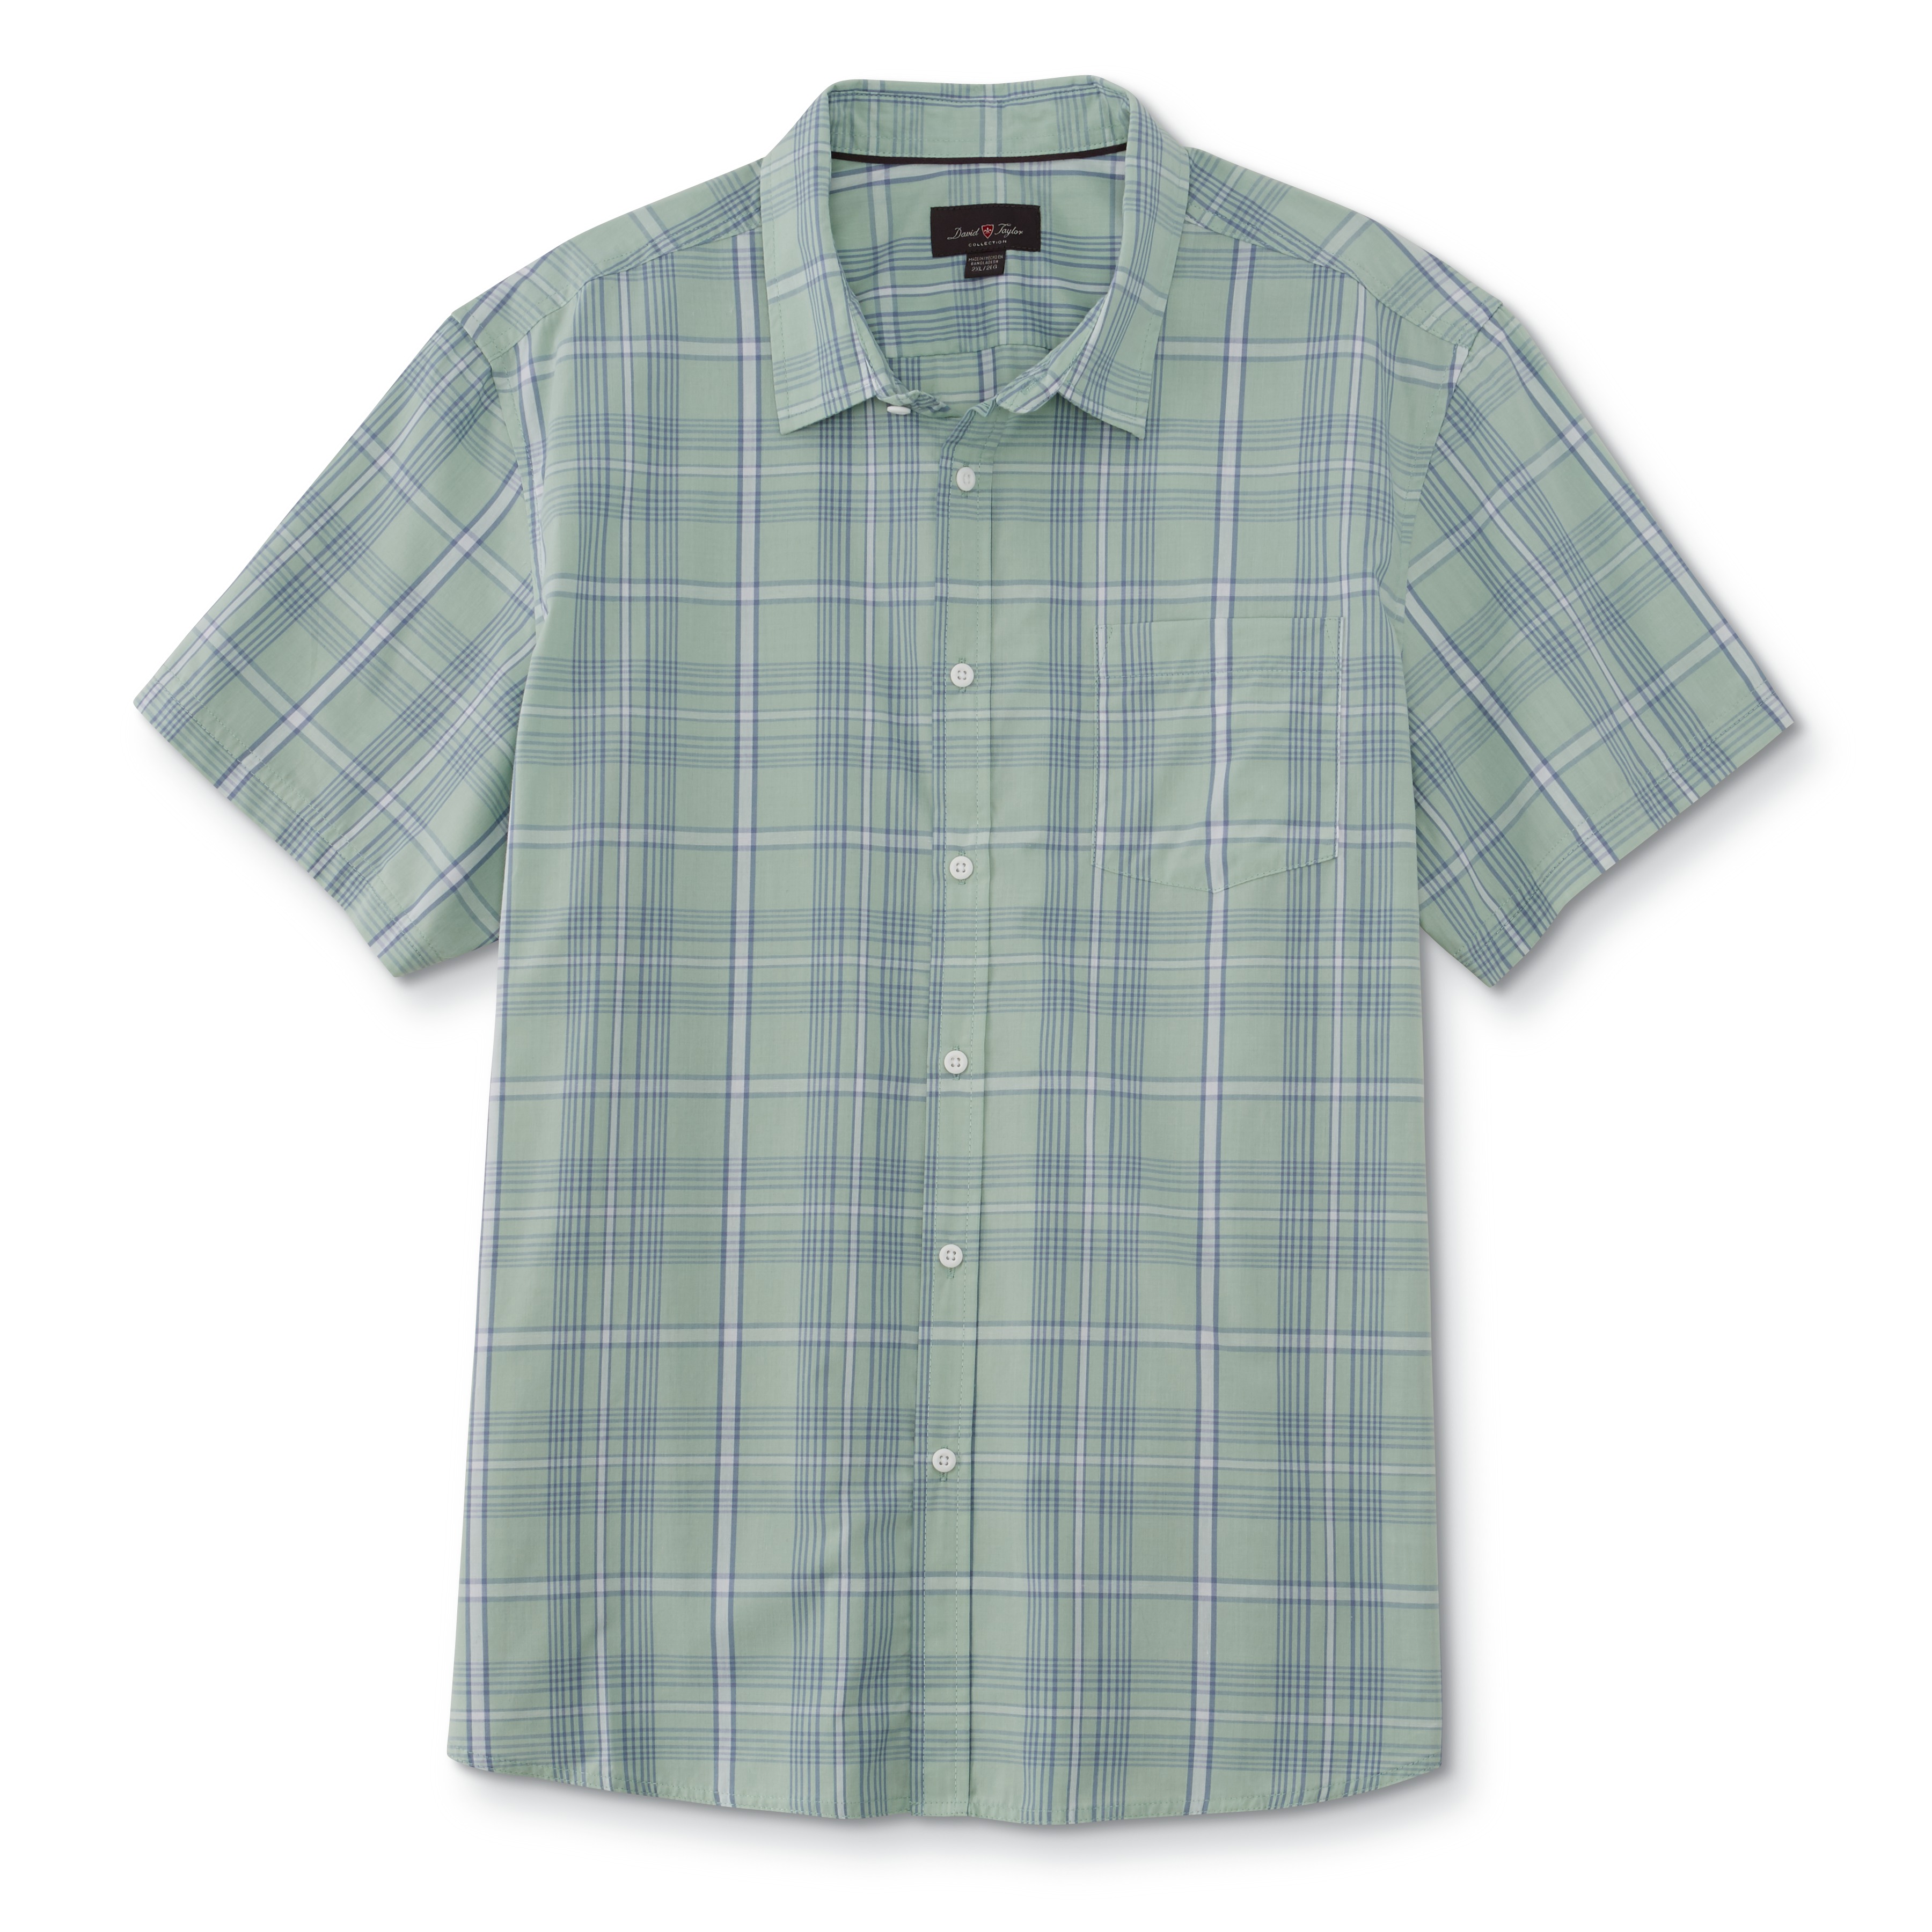 David Taylor Collection Men's Short-Sleeve Oxford Shirt - Plaid